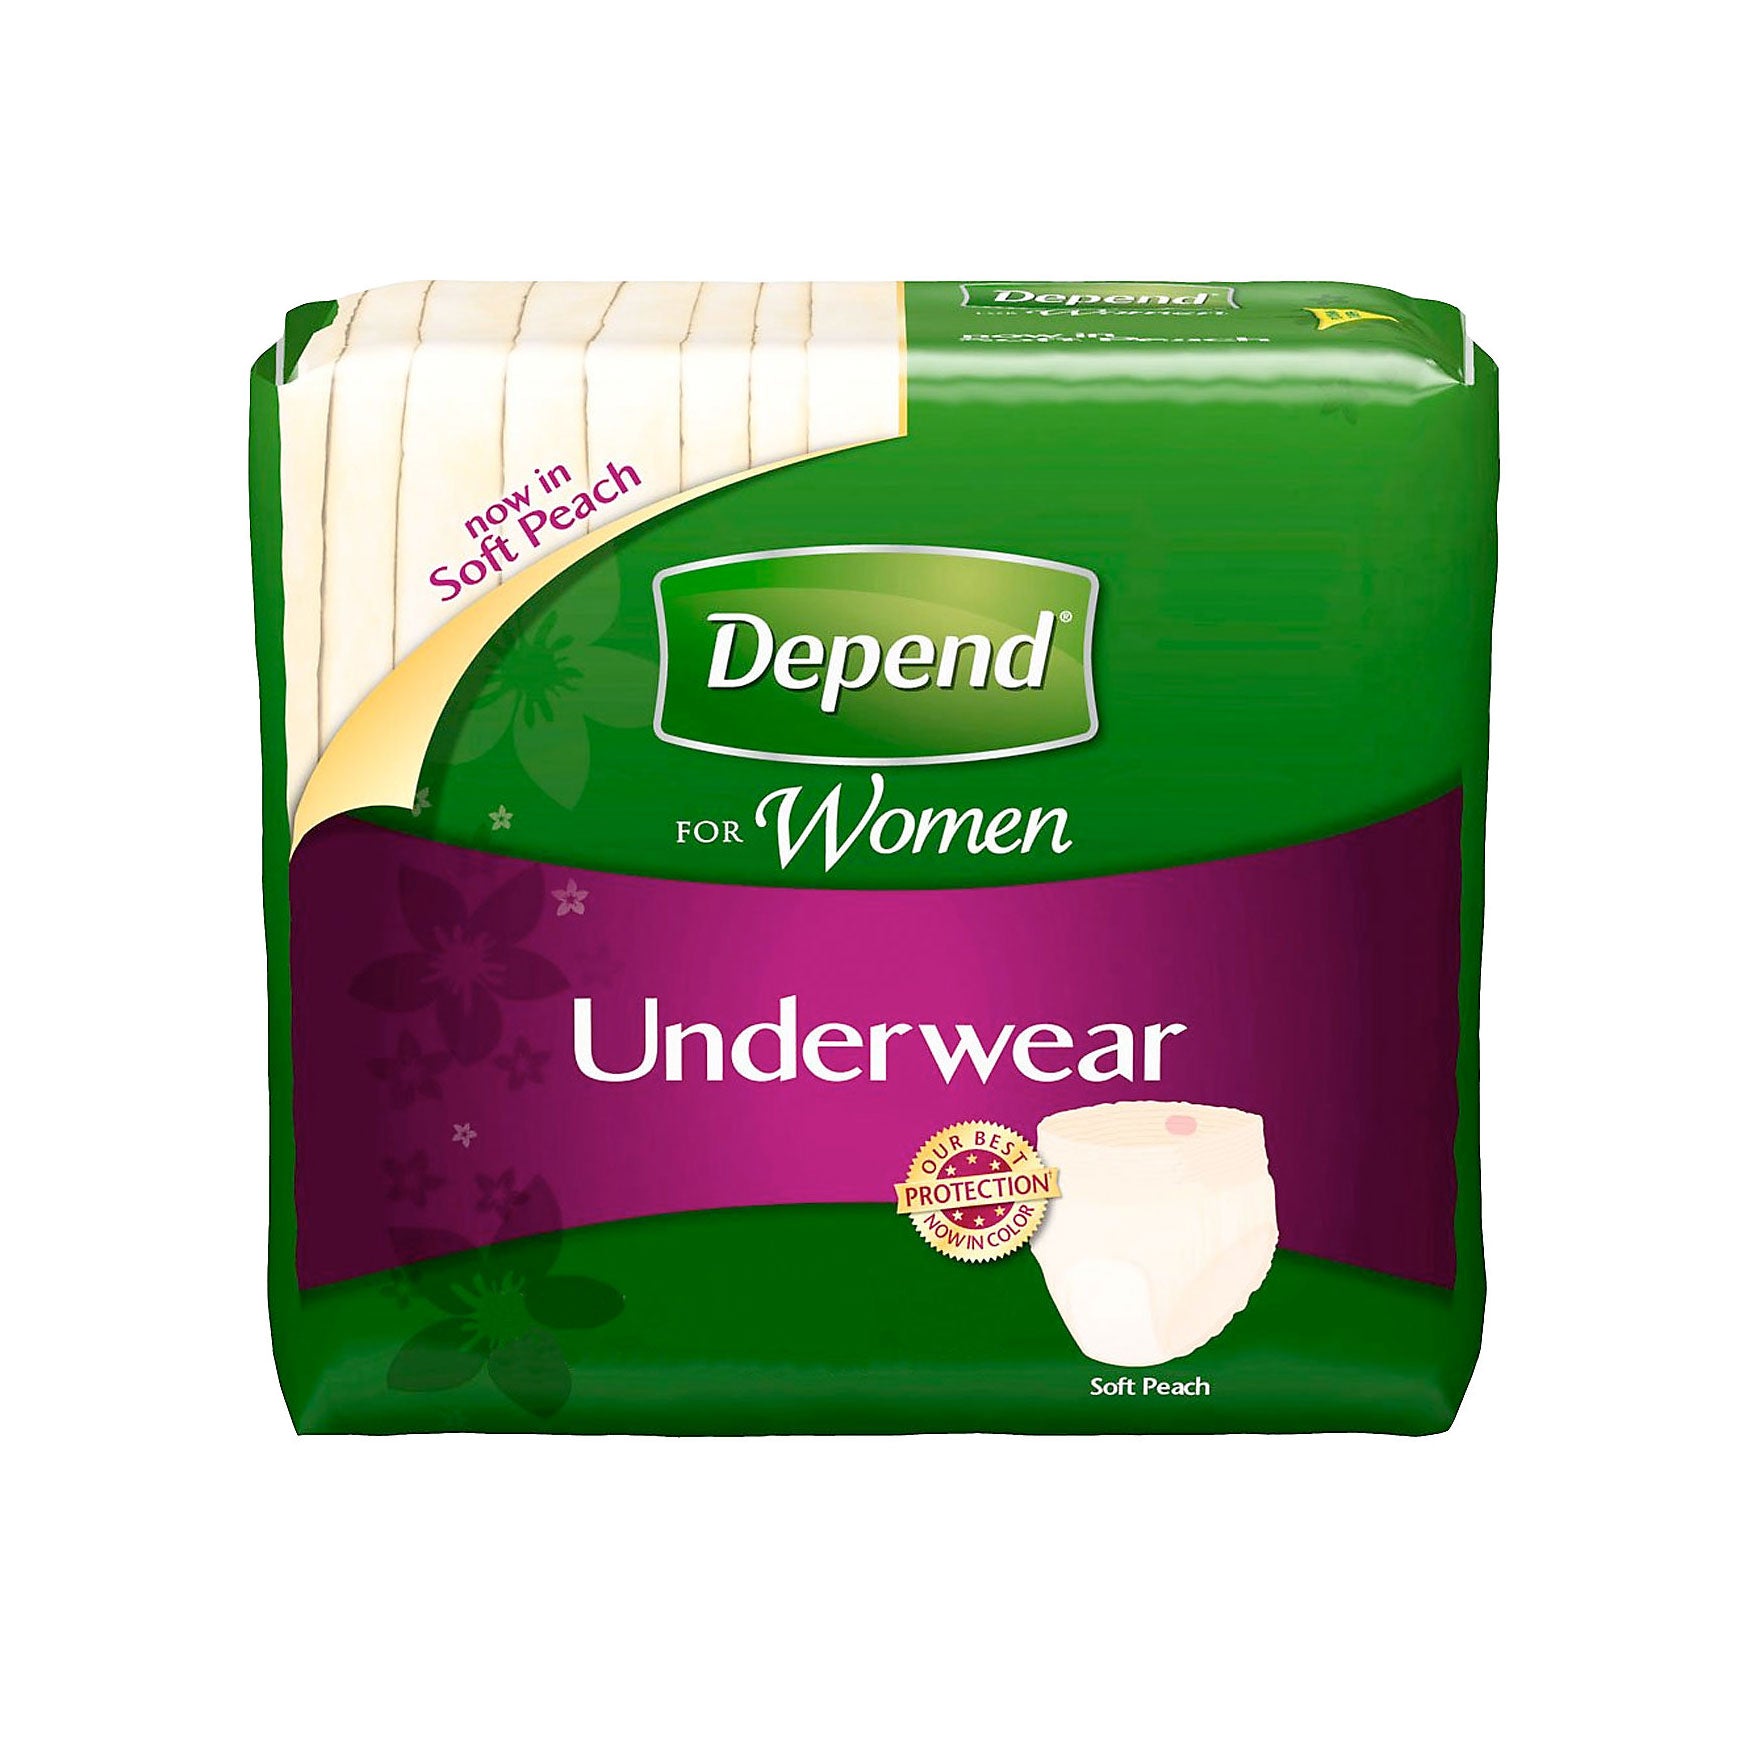 Depend Maximum Fit Flex Women's Underwear 32 pack